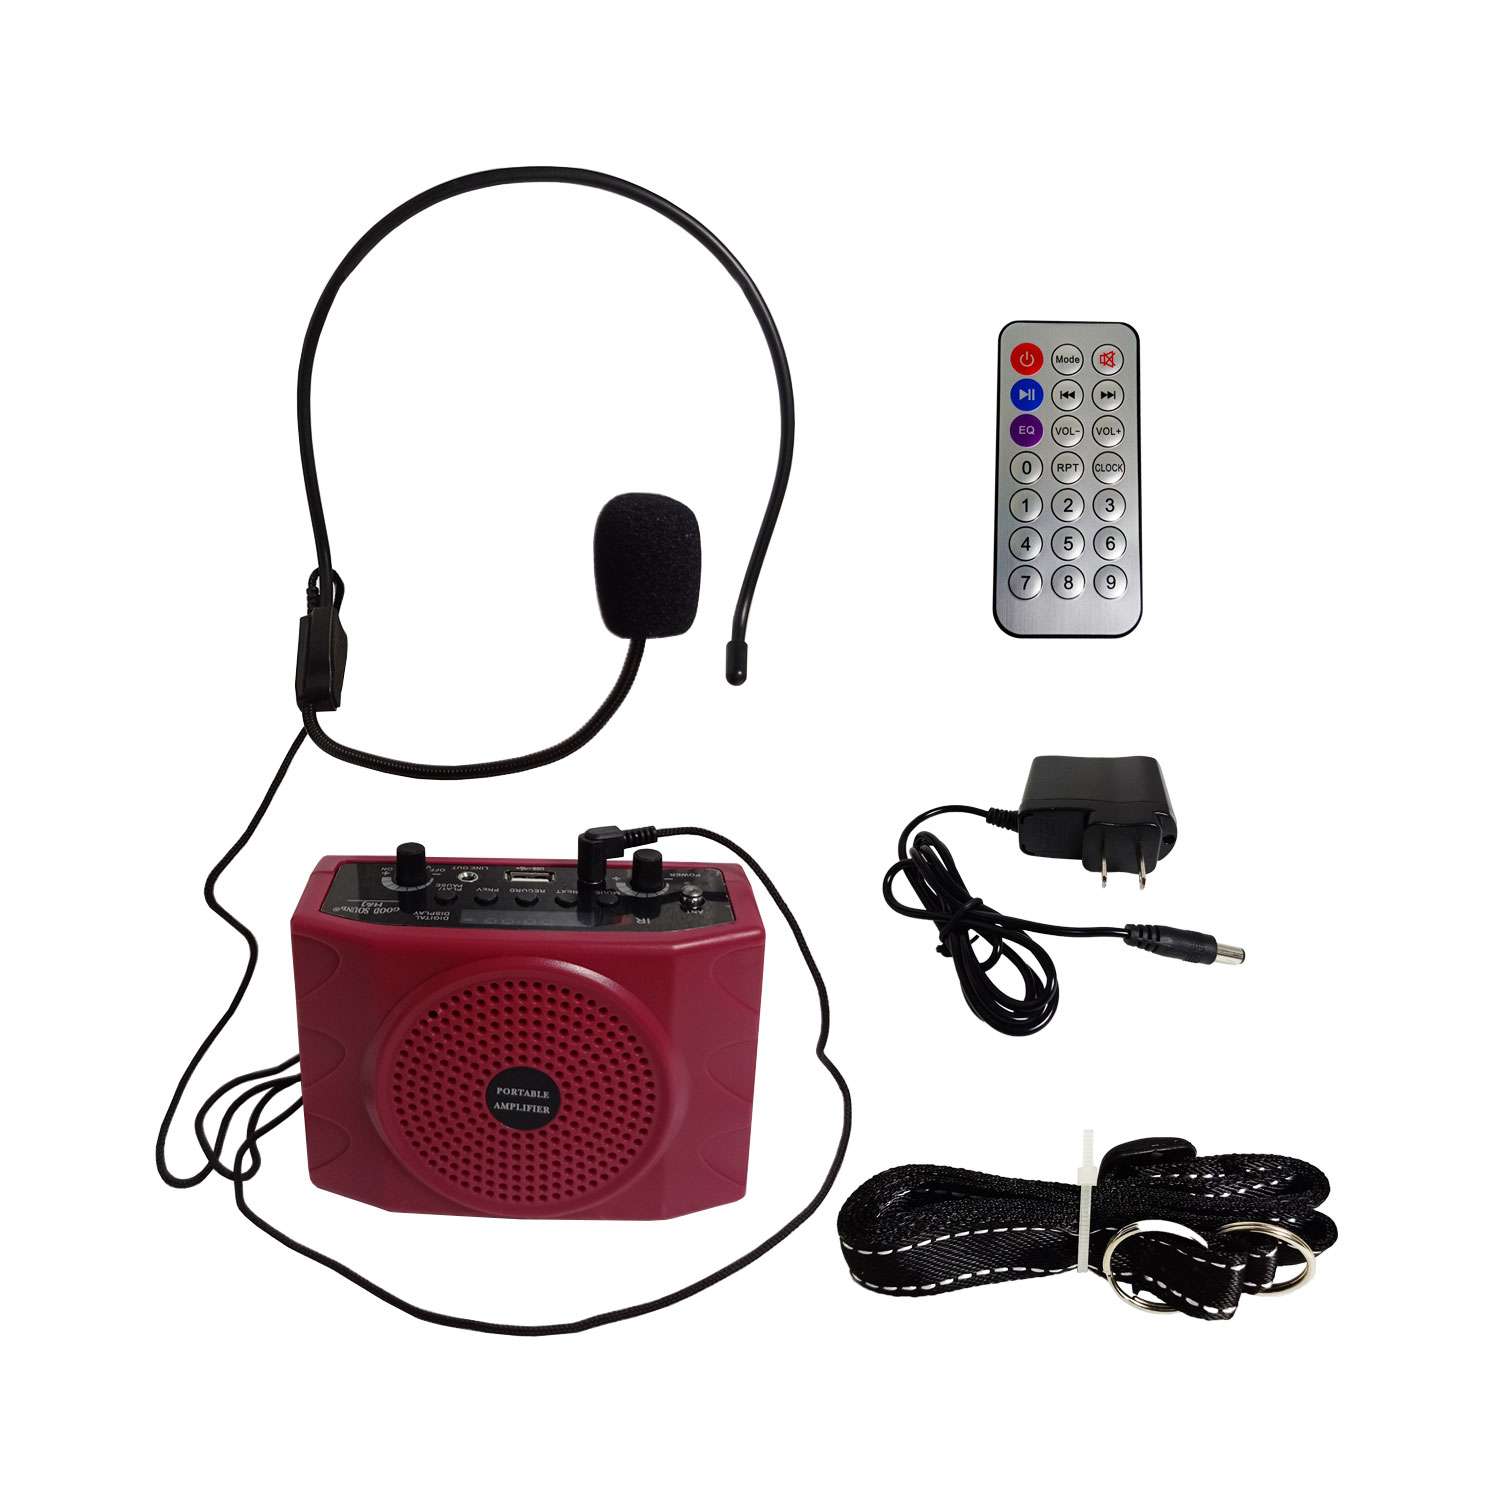 Mini Radio Portátil FM con Bluetooth, USB y Micrófono Tipo Vincha  JJ-91002-RED 